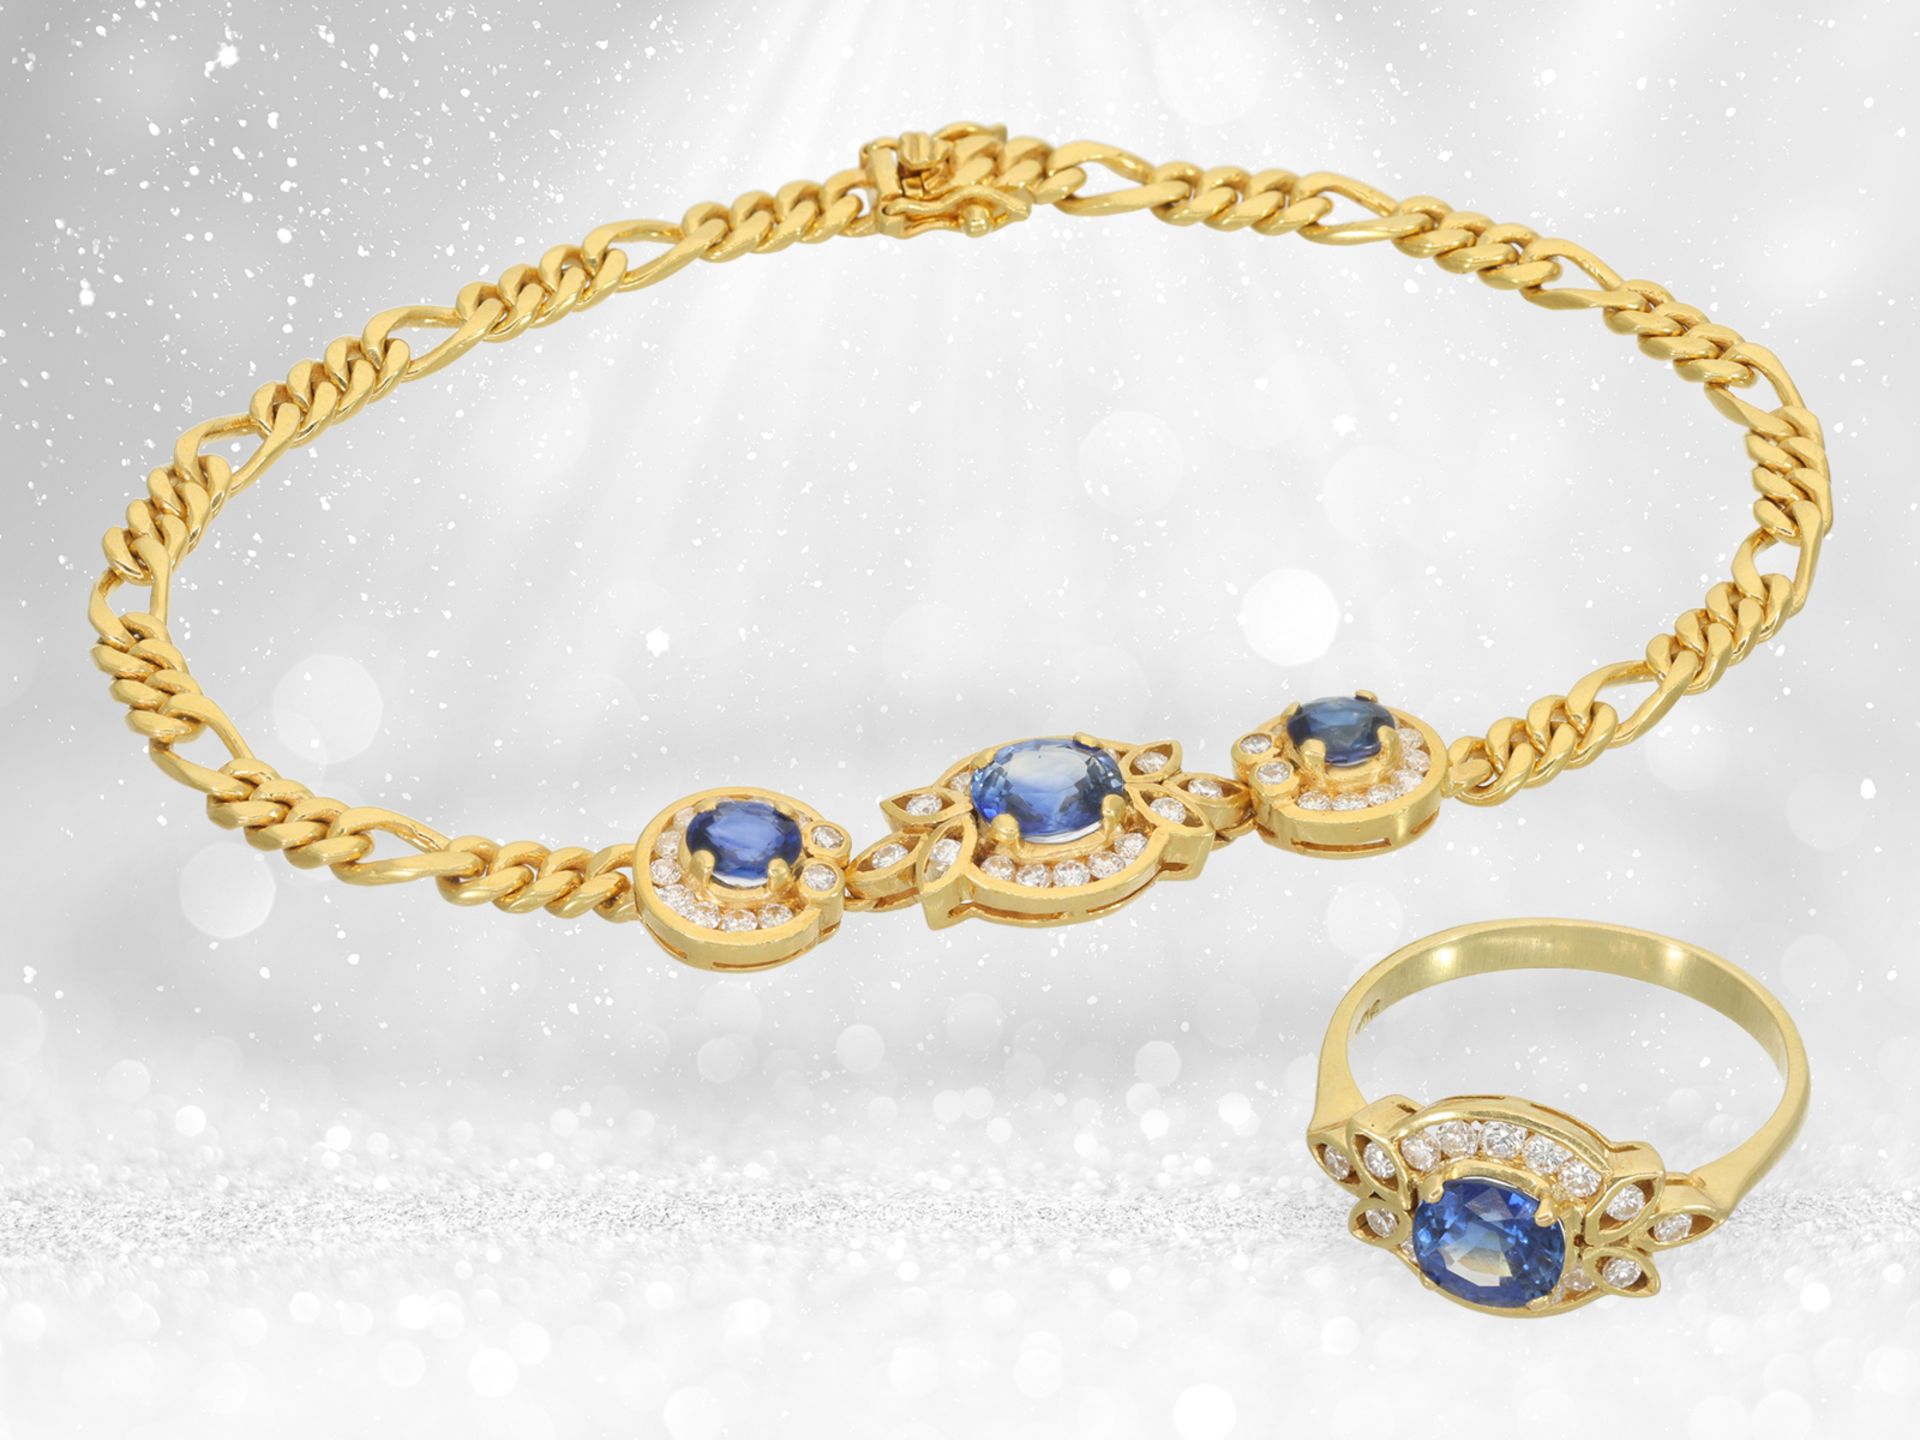 Filigree sapphire/brilliant-cut diamond goldsmith's bracelet with matching ring, 18K gold